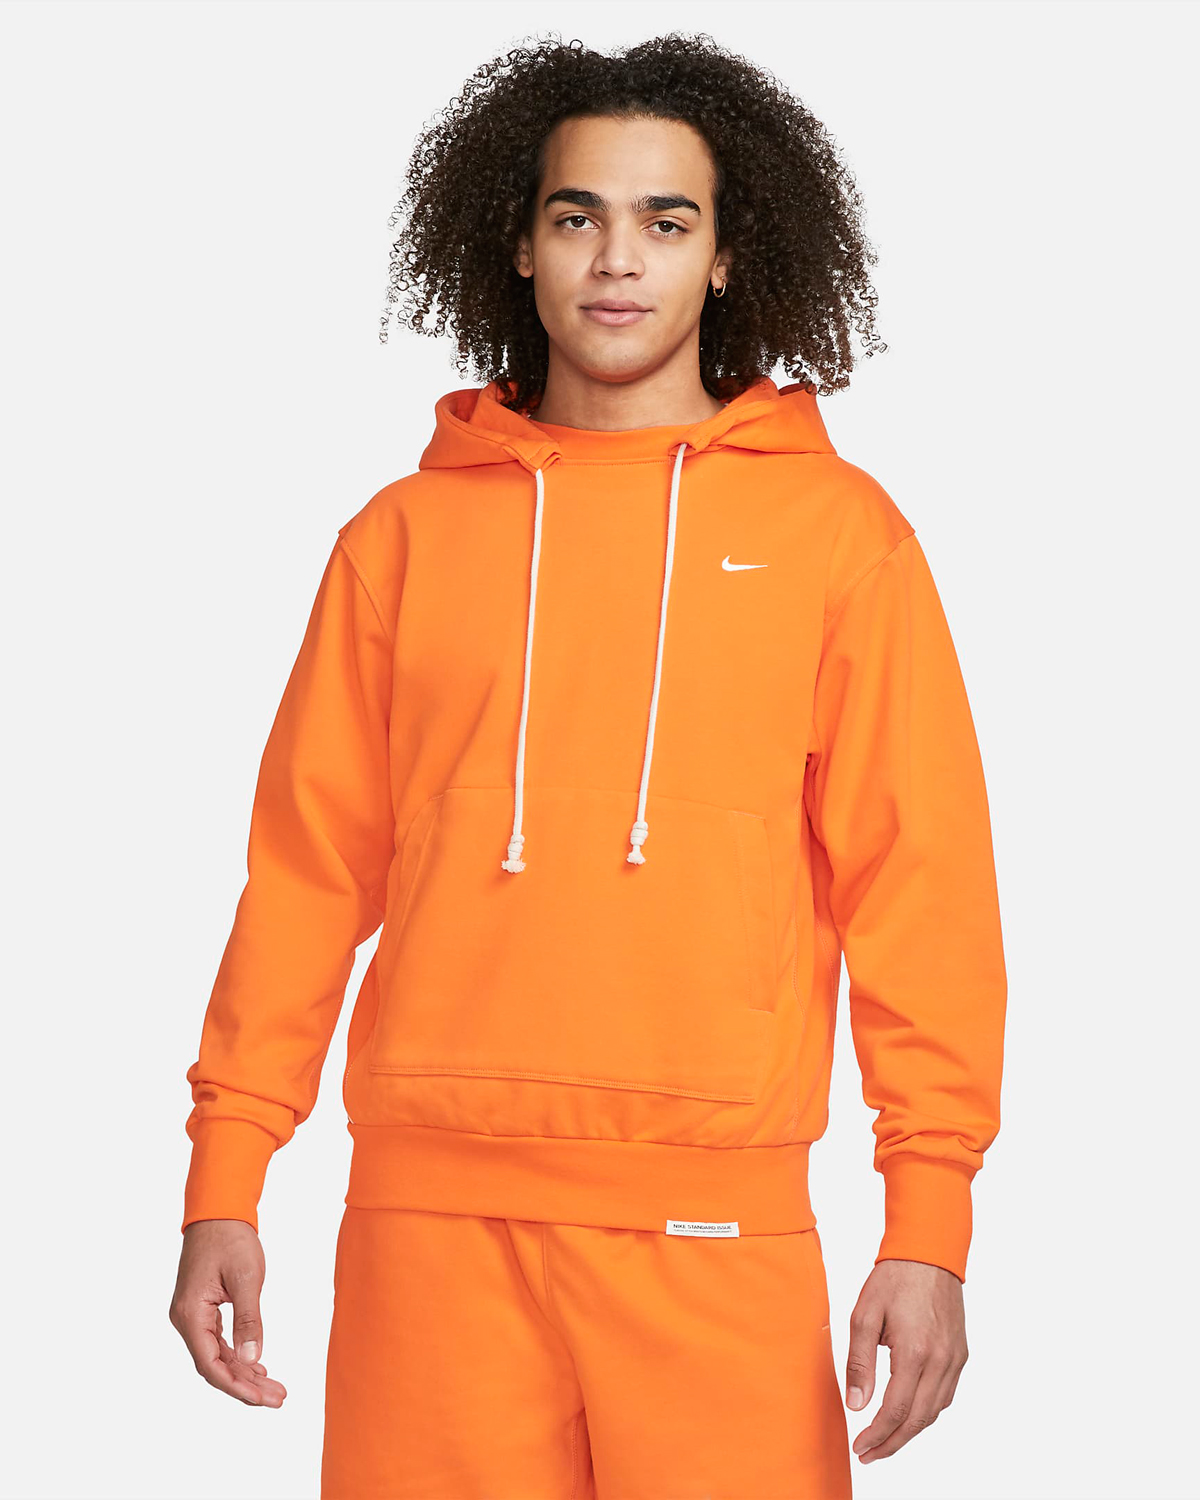 Nike-Standard-Issue-Hoodie-Safety-Orange